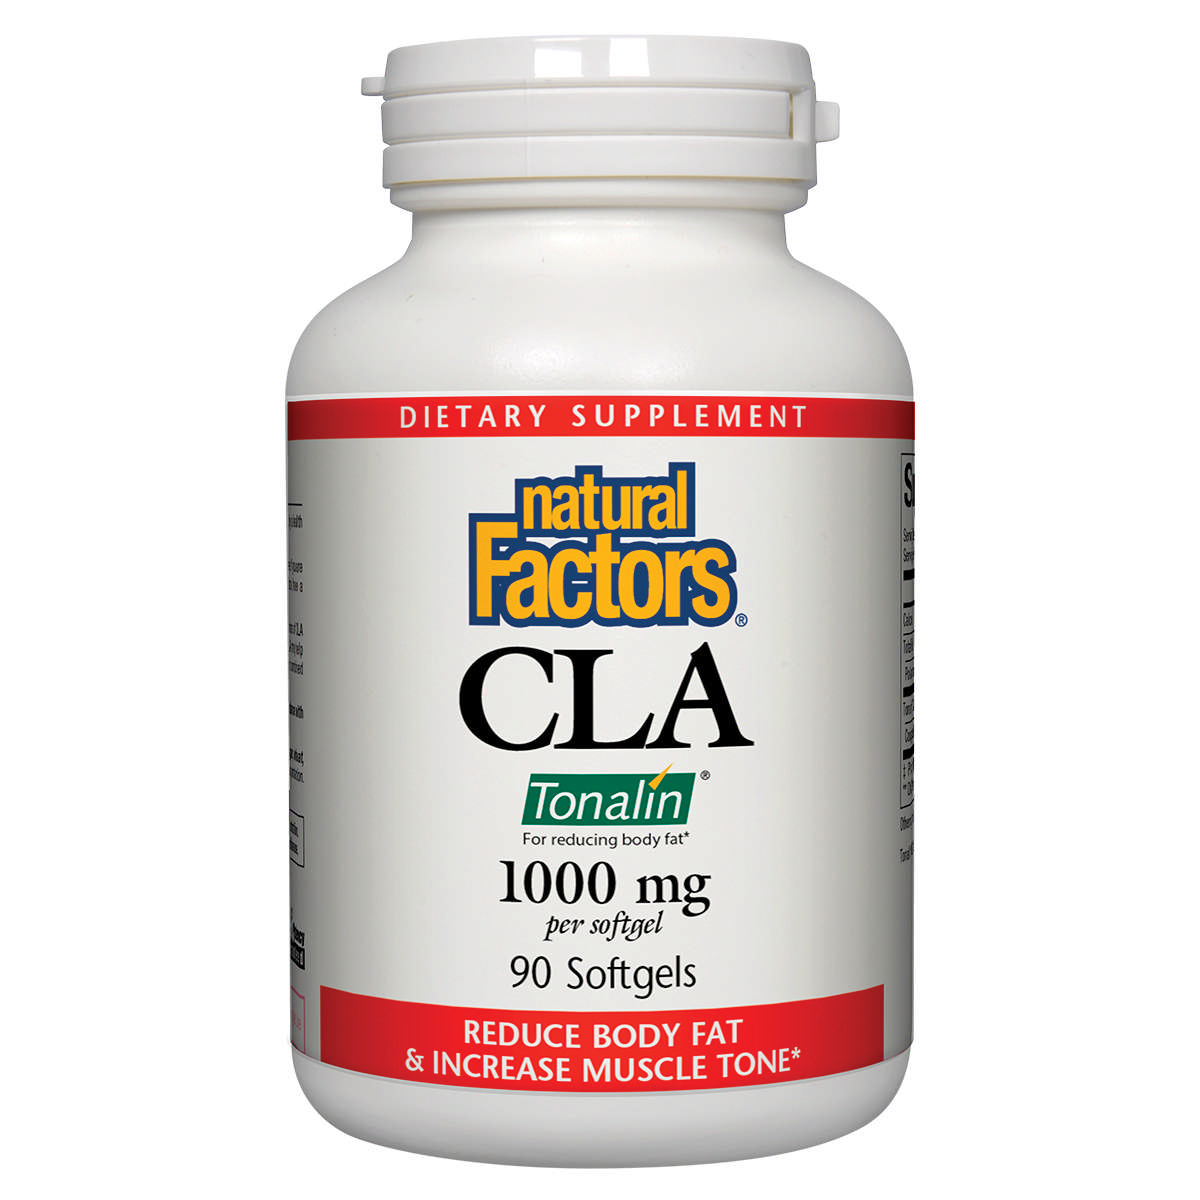 Natural Factors - Cla 1000 mg Tonalin